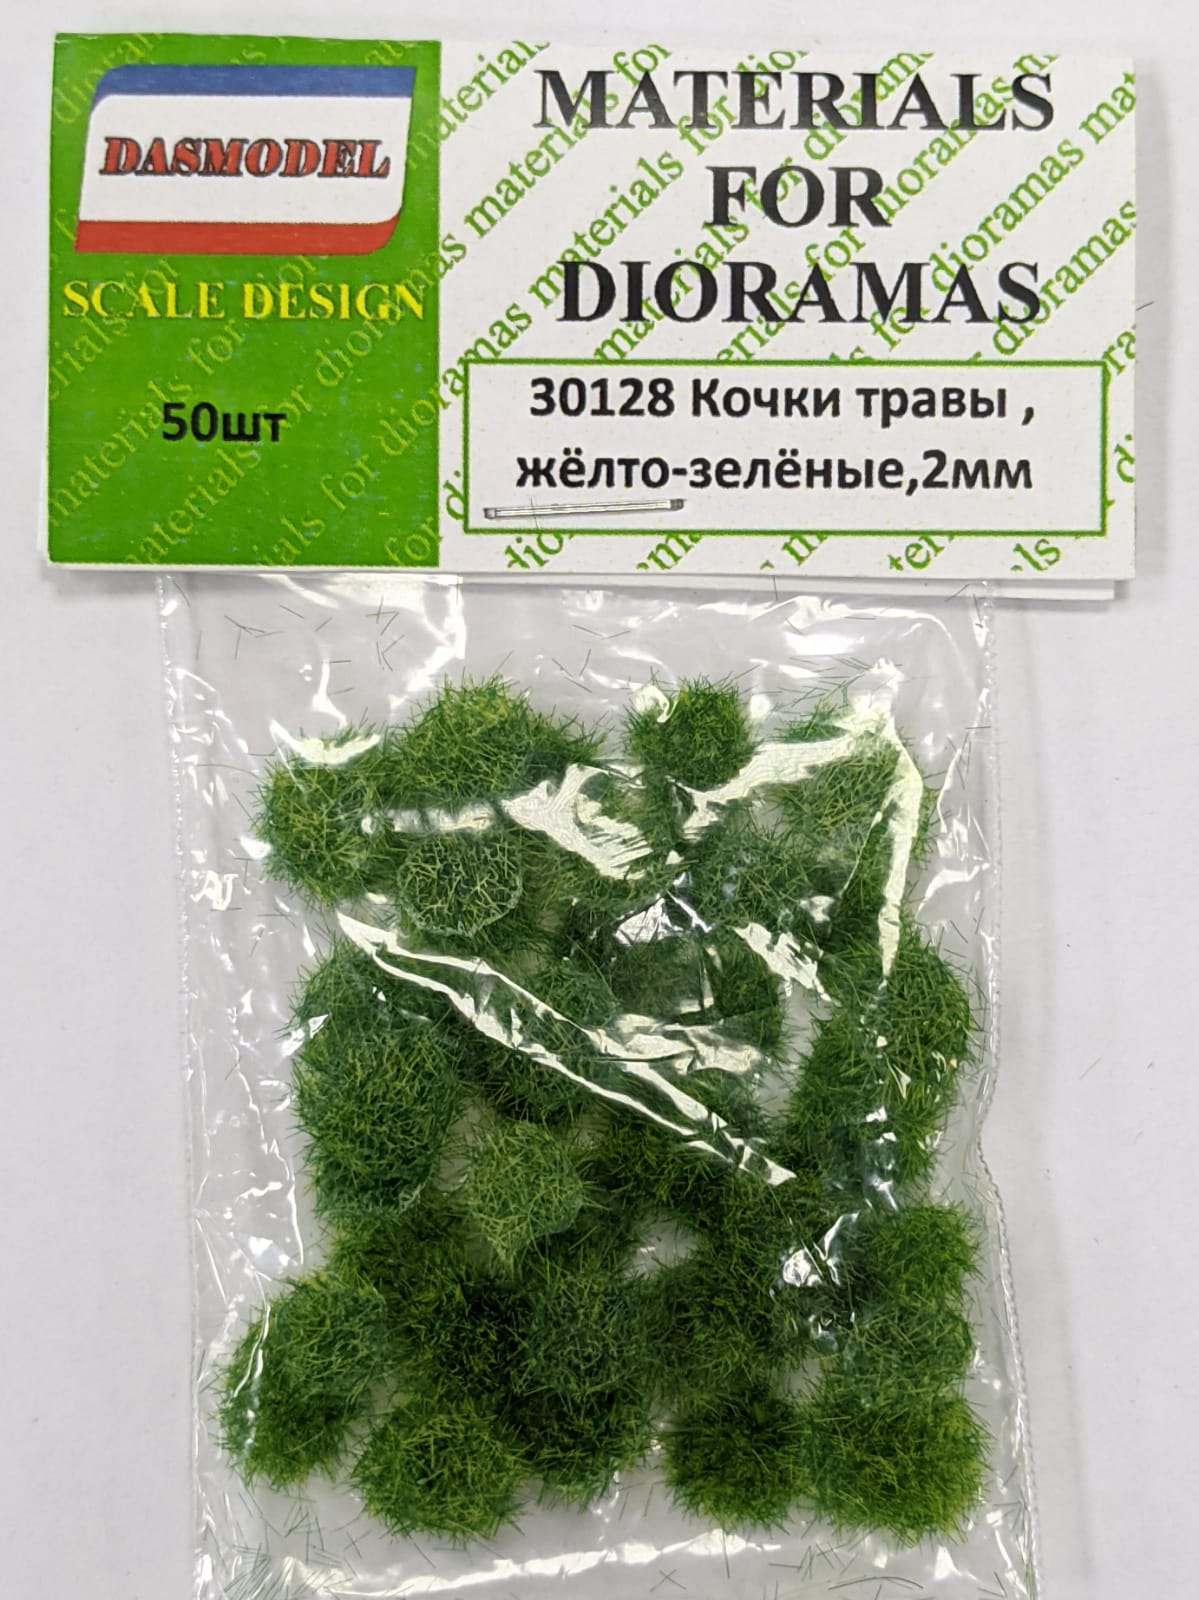 30128  материалы для диорам  Кочки травы, жёлто-зелёные, 2мм / 50шт